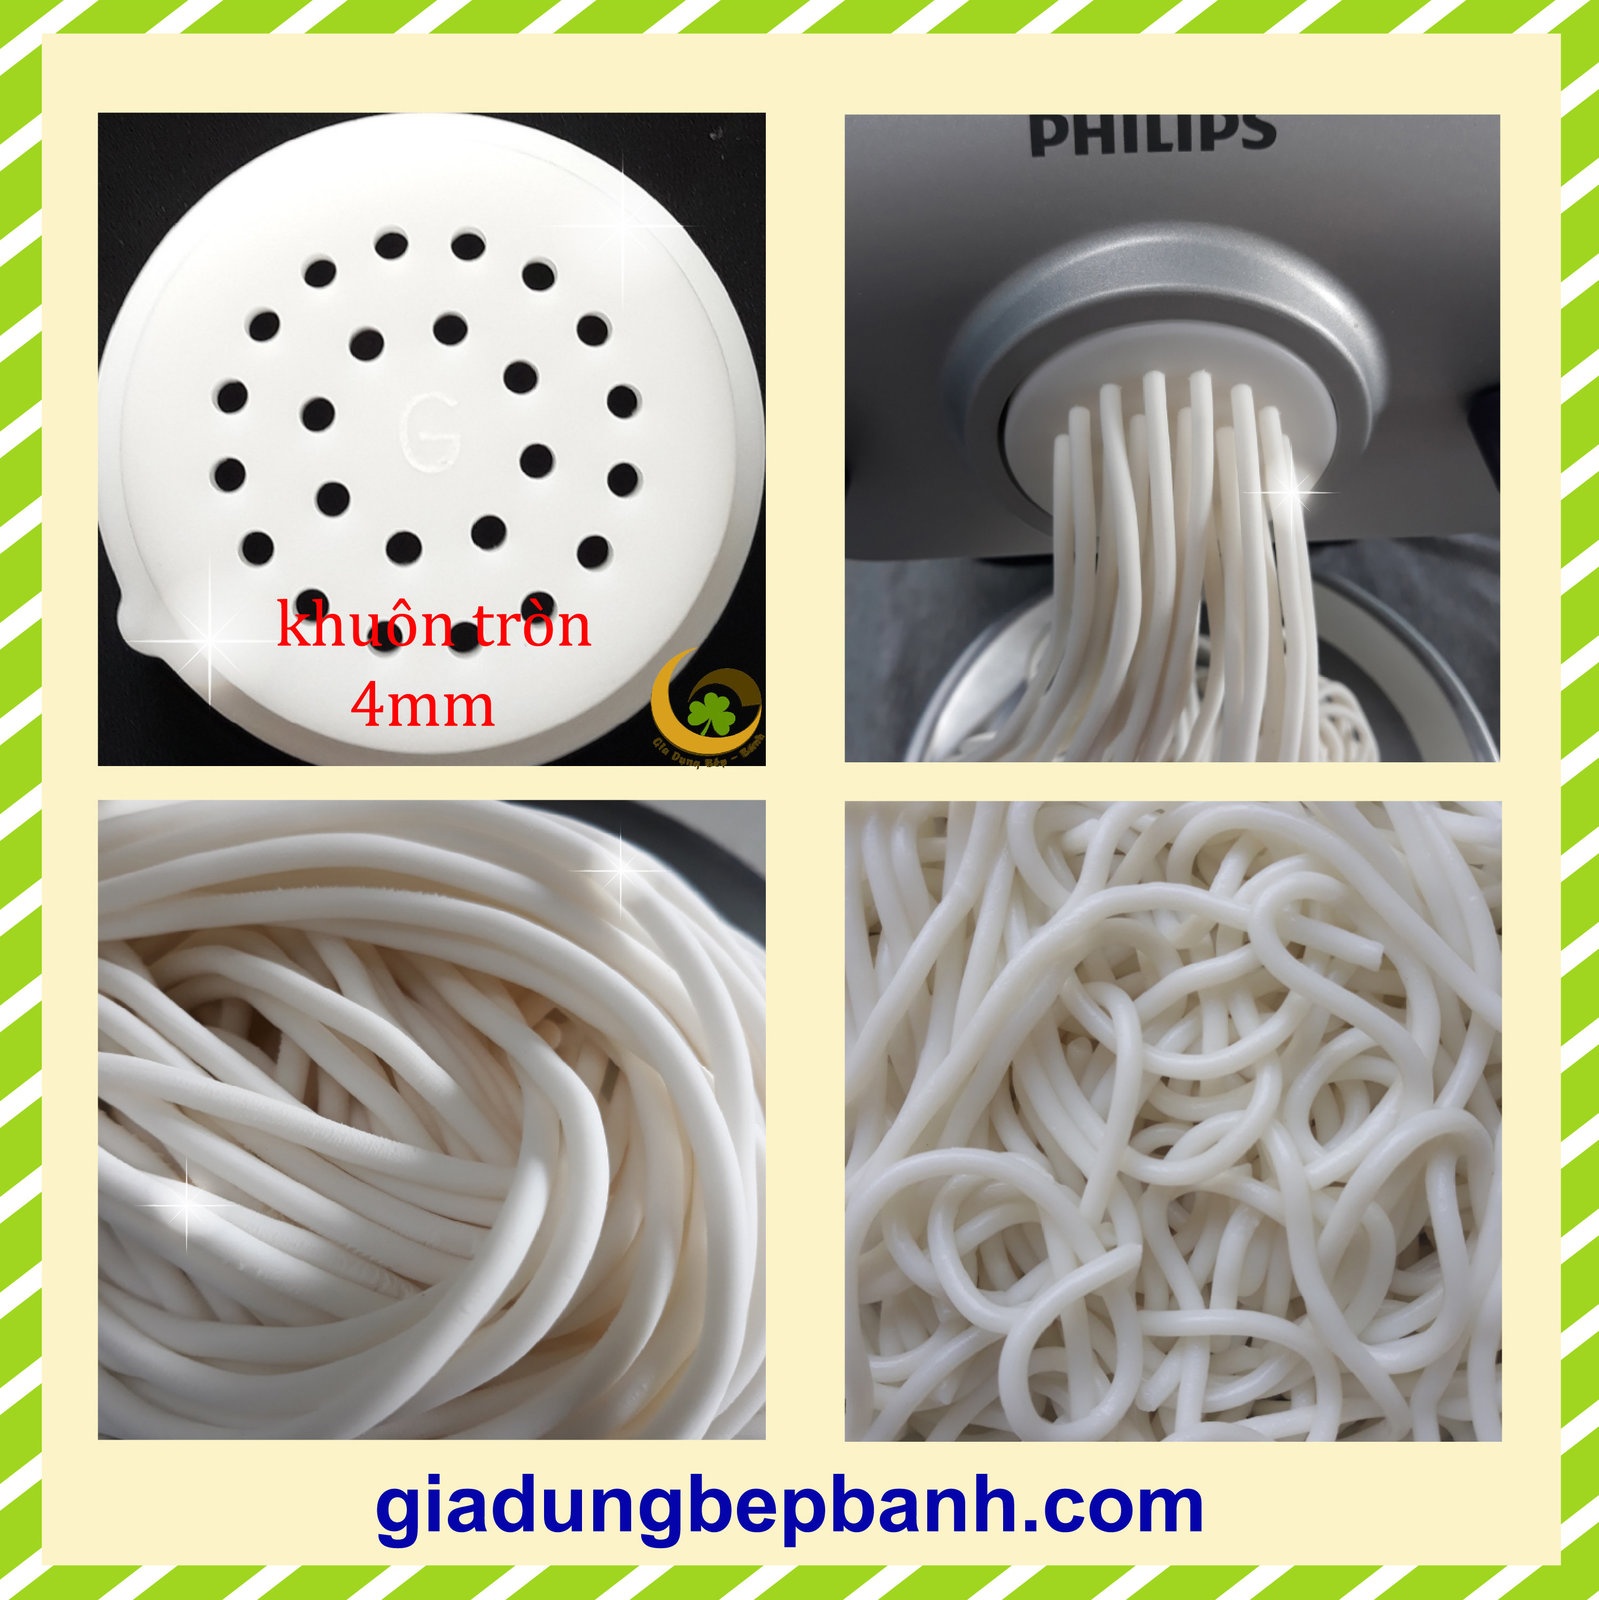 ALBUCA05 Diamètre 5mm Bucatini Pasta Disc compatible avec Philips Pasta Maker BNN 